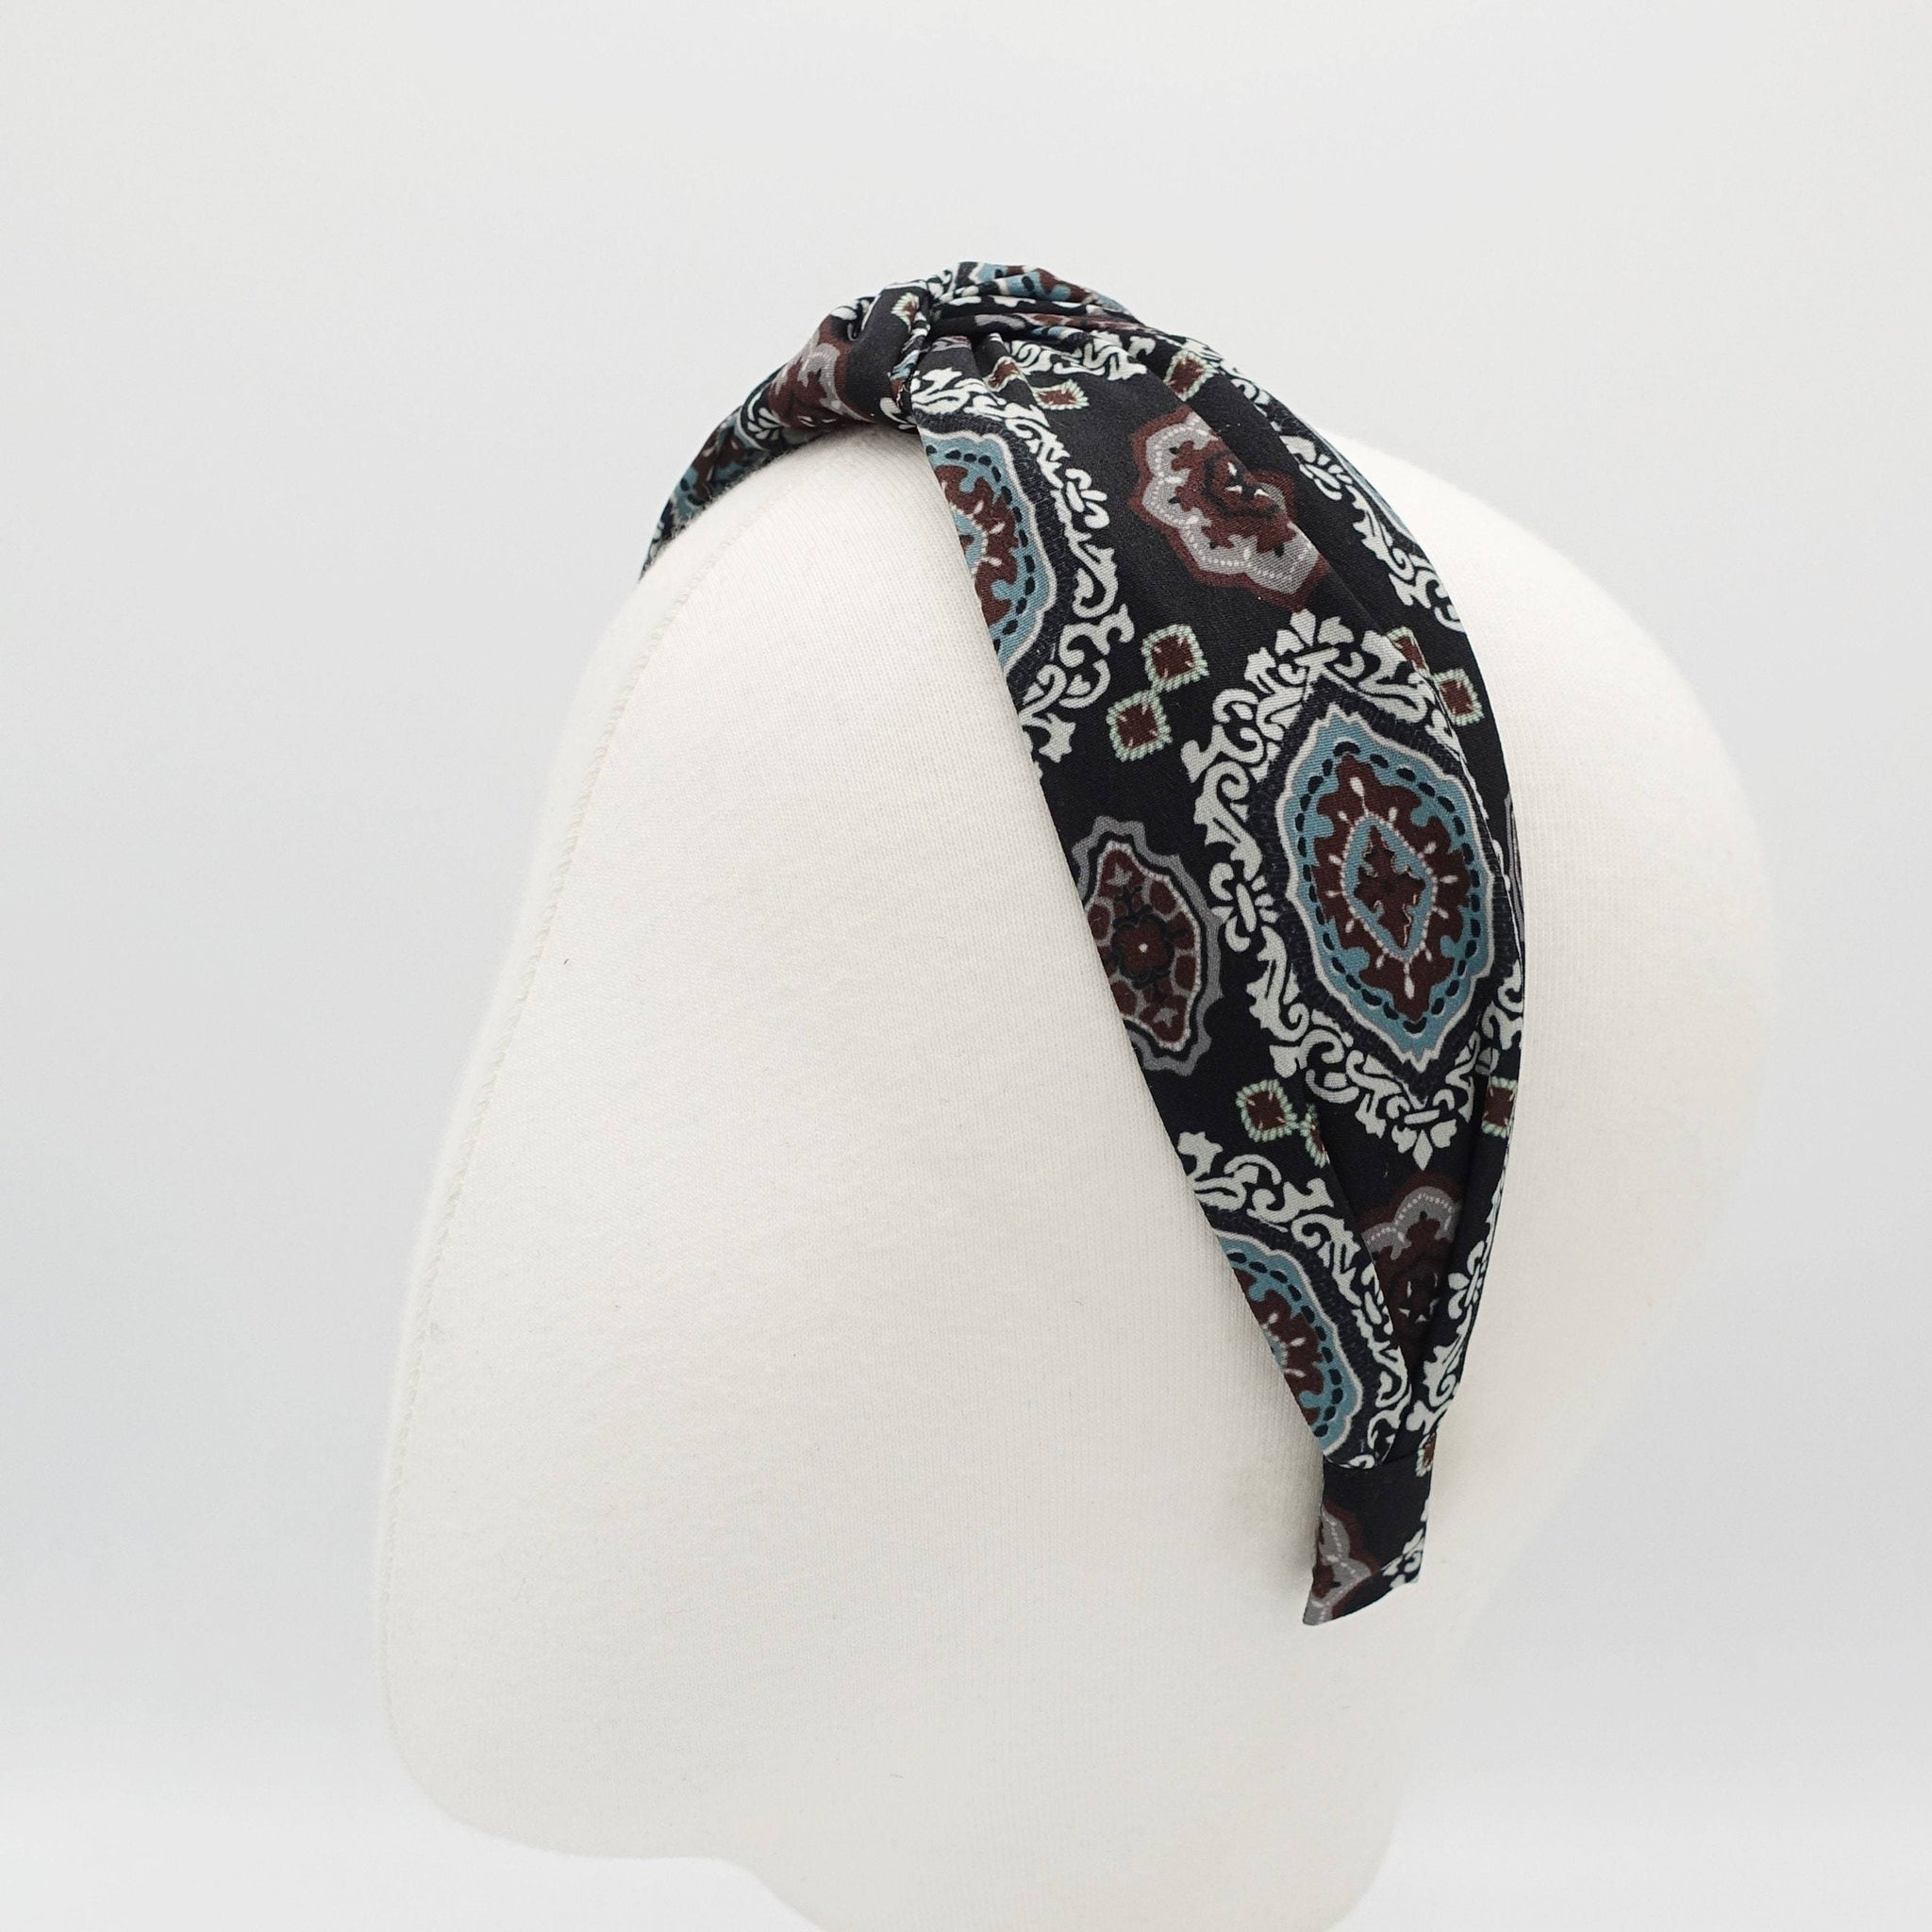 VeryShine baroque knot headband Autumn hair accessory for women